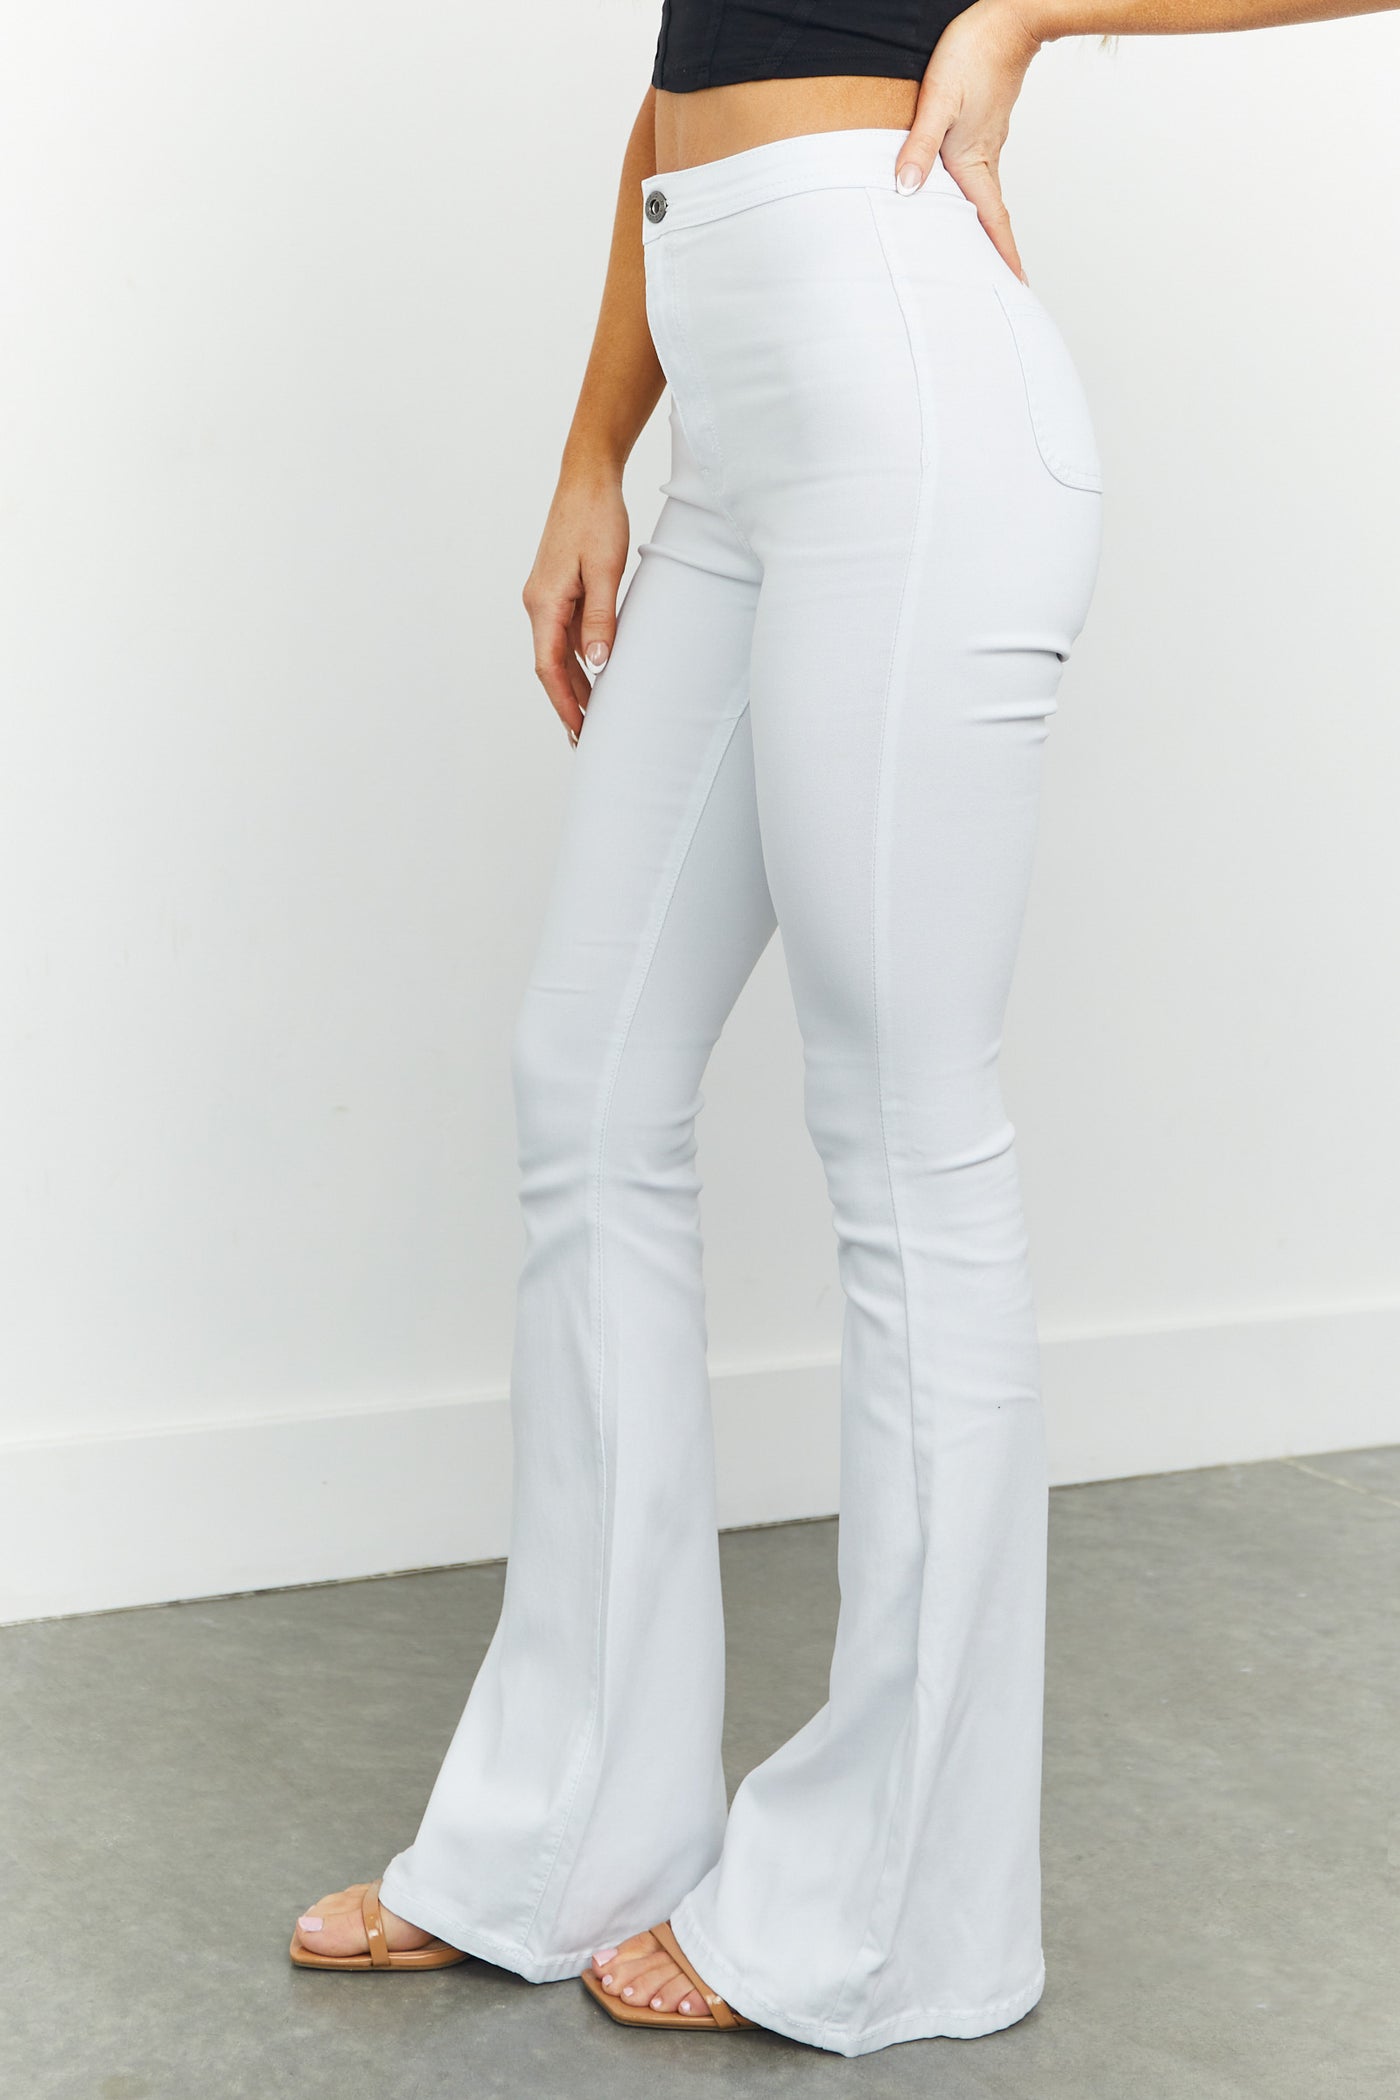 JC & JQ Bella White Super Stretch Flare Jeans | Lime Lush